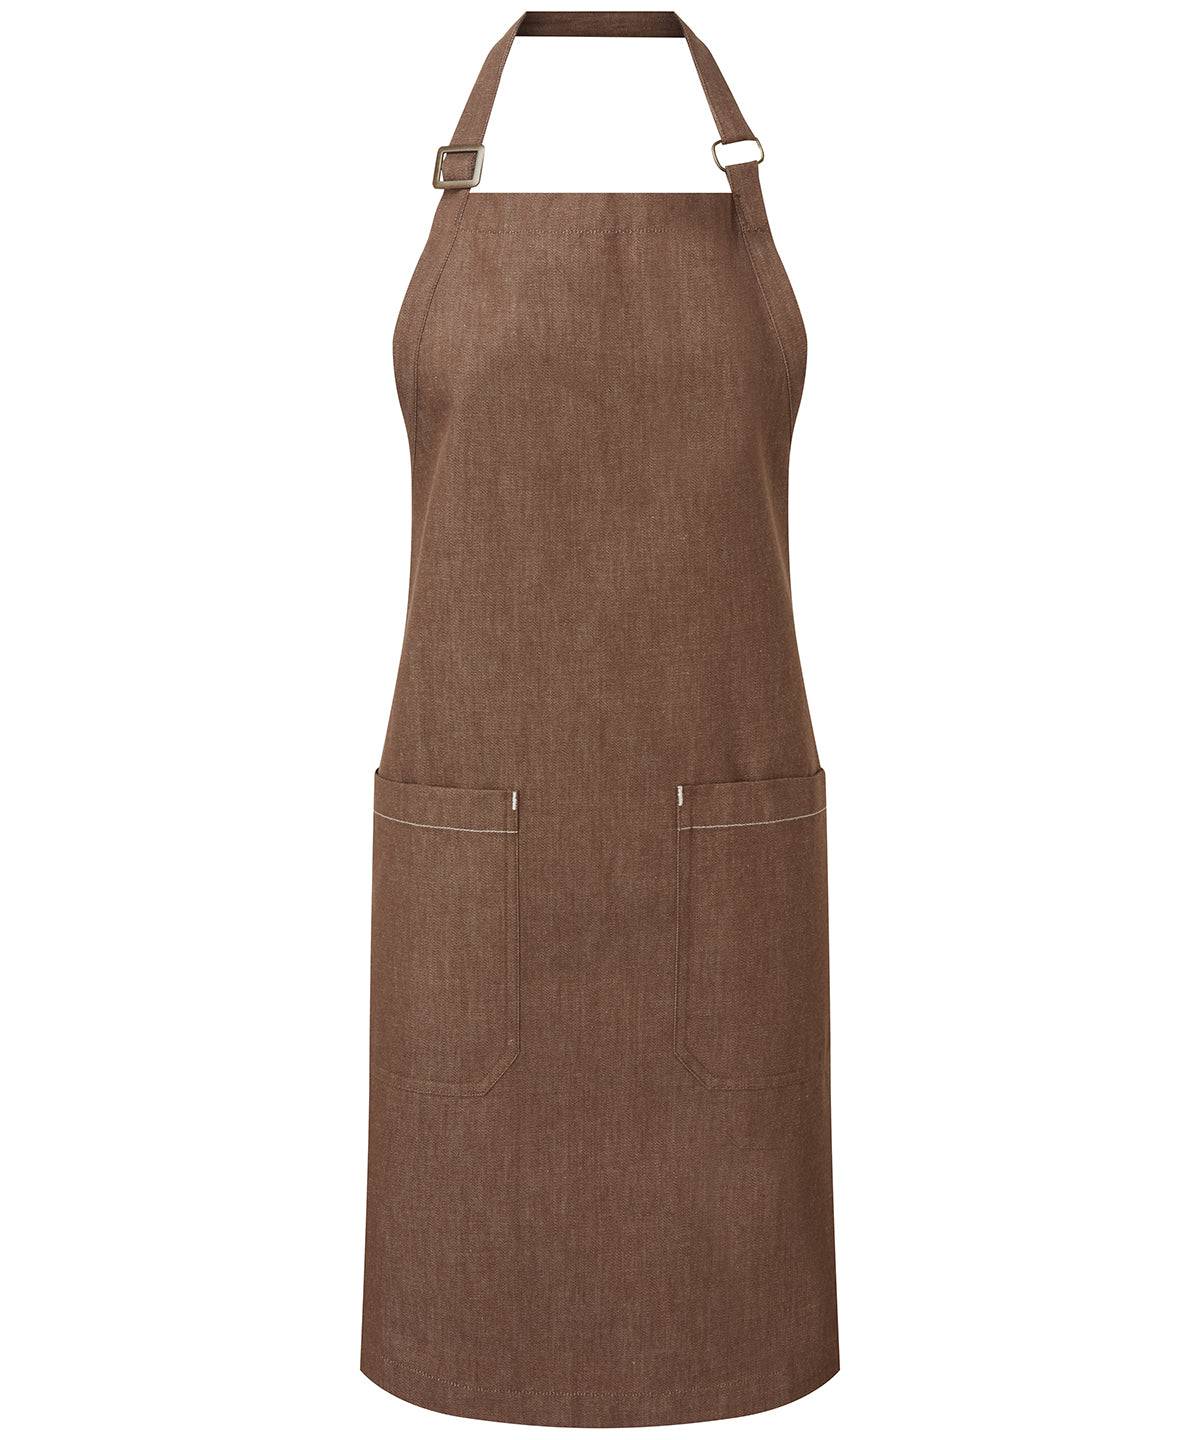 Brown Denim - Cotton denim bib apron, organic and Fairtrade certified